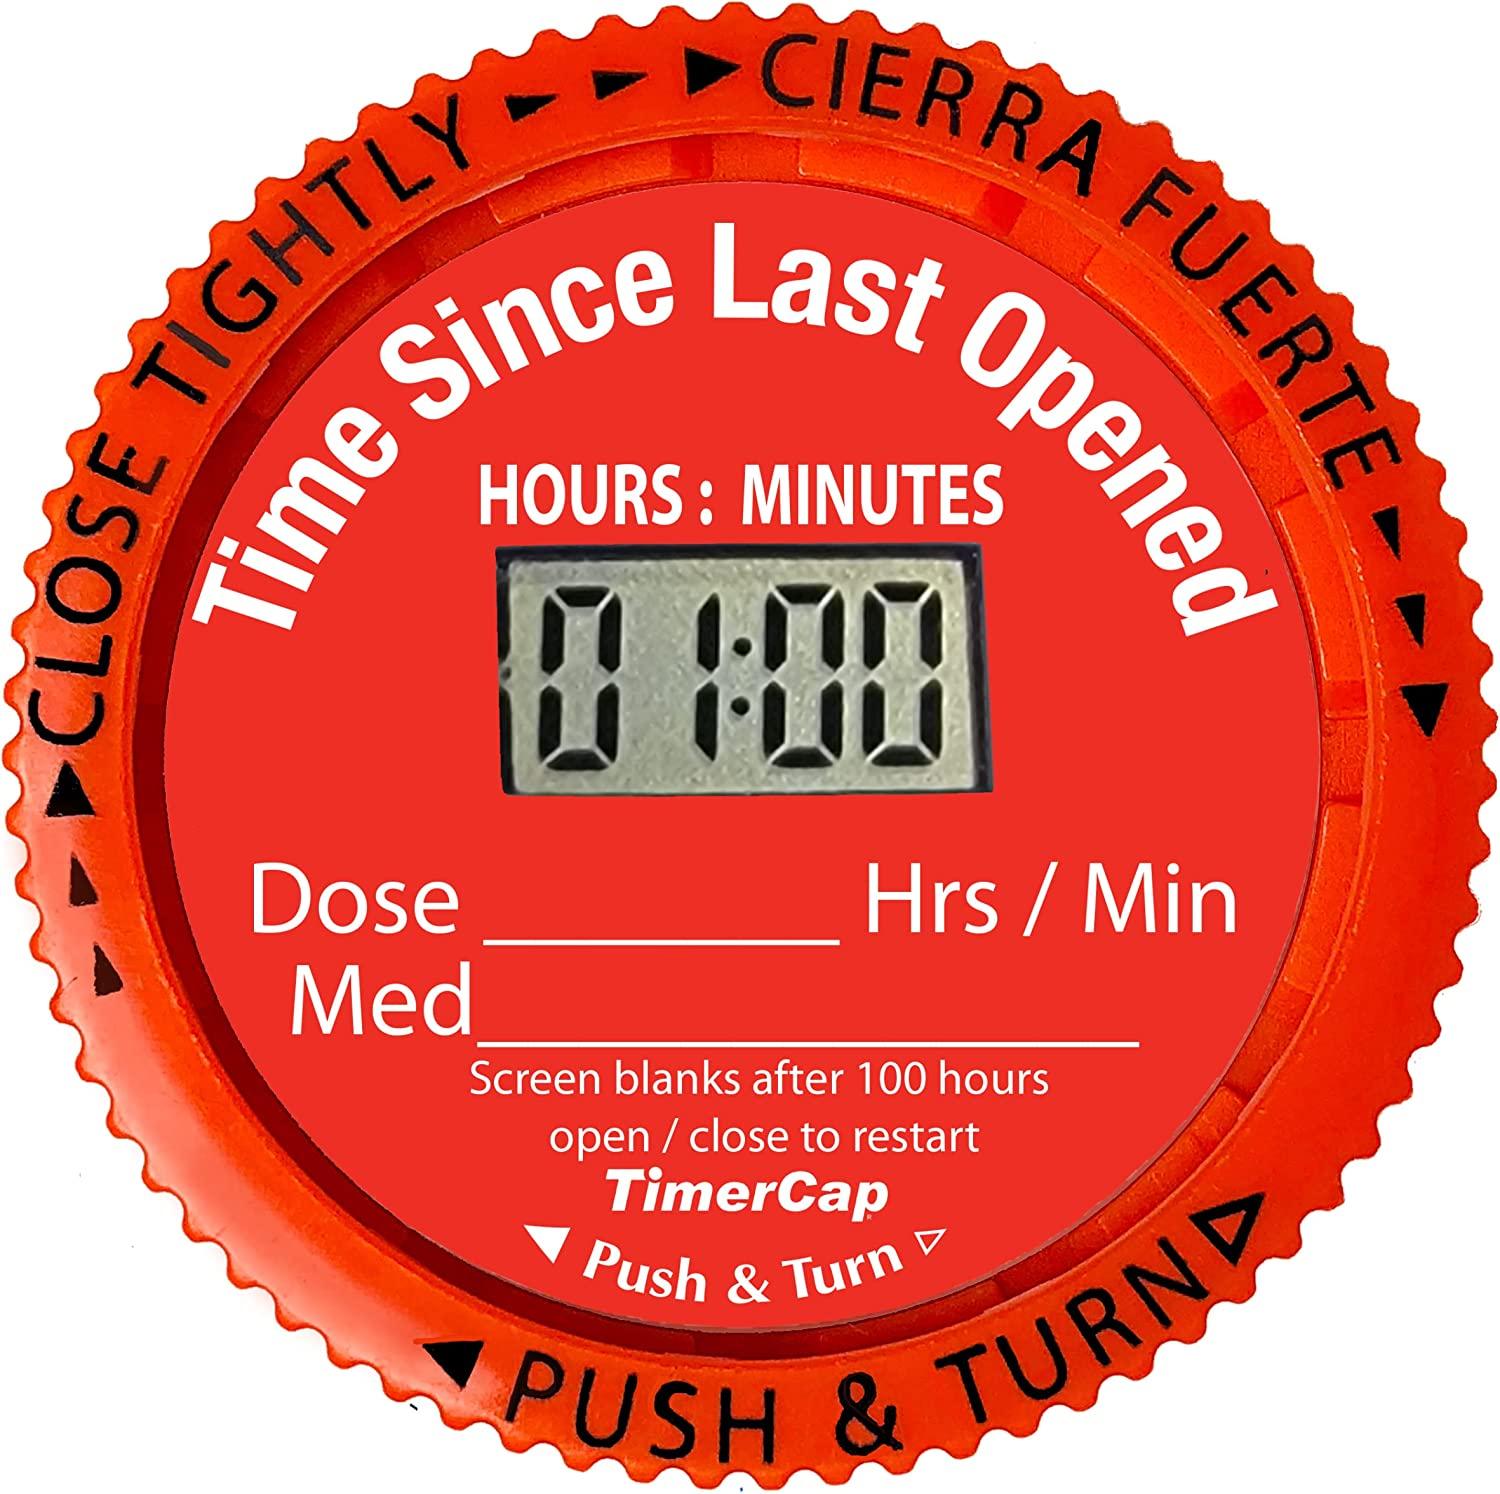 Patient Sleep Supplies > TimerCap > TimerCap Automatically Displays Time  Since Last Opened - Built-in Stopwatch Smart Pill Bottle Cap Medication  Reminder Case (Qty 4-4.0 oz Amber Bottles) EZ-Twist